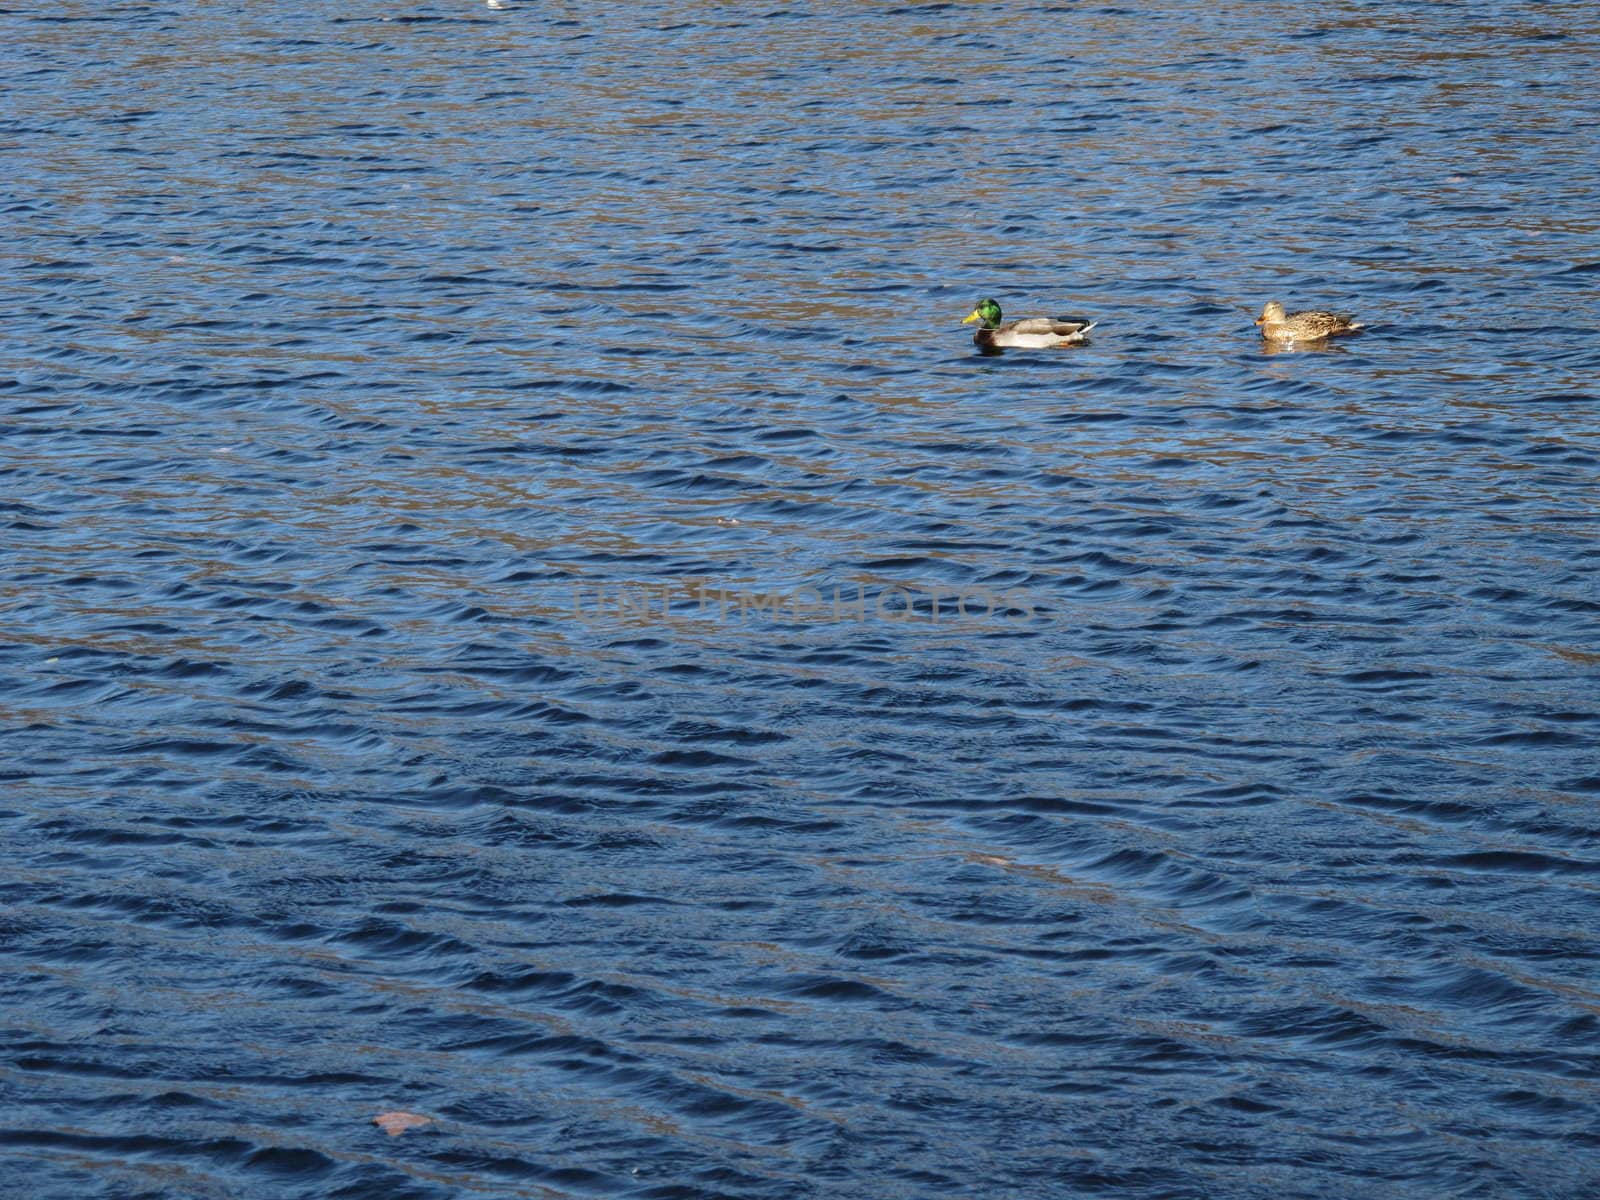 Wild ducks line up for a swim